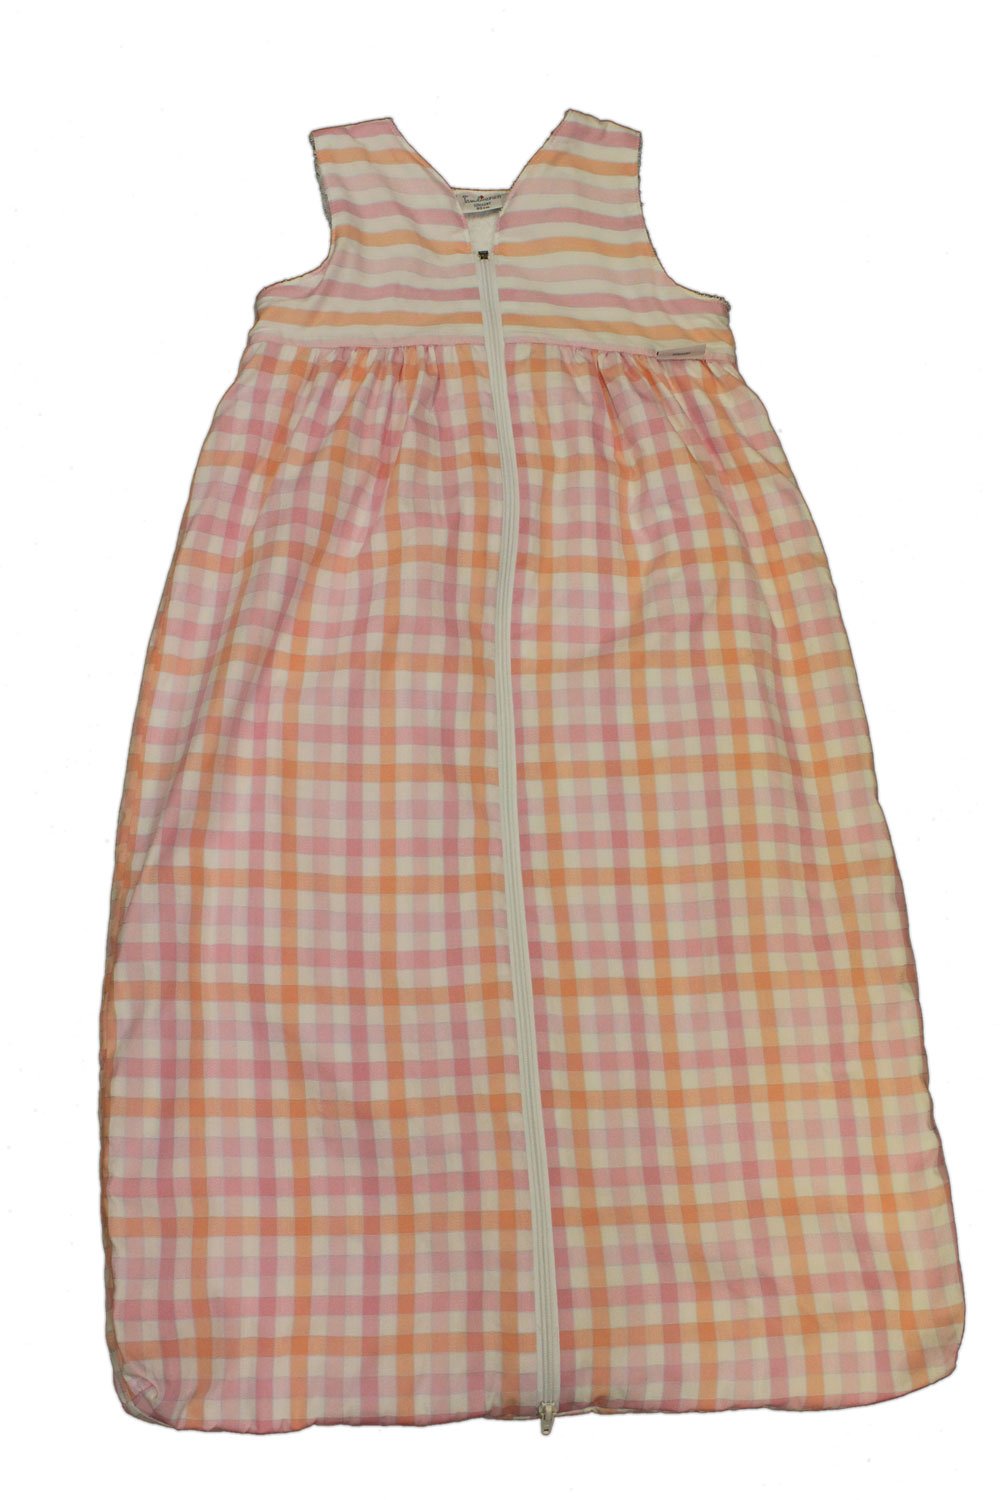 Tavolinchen 35/543 35 – Terry Gingham Dress Sleeping Bag 90 cm pink